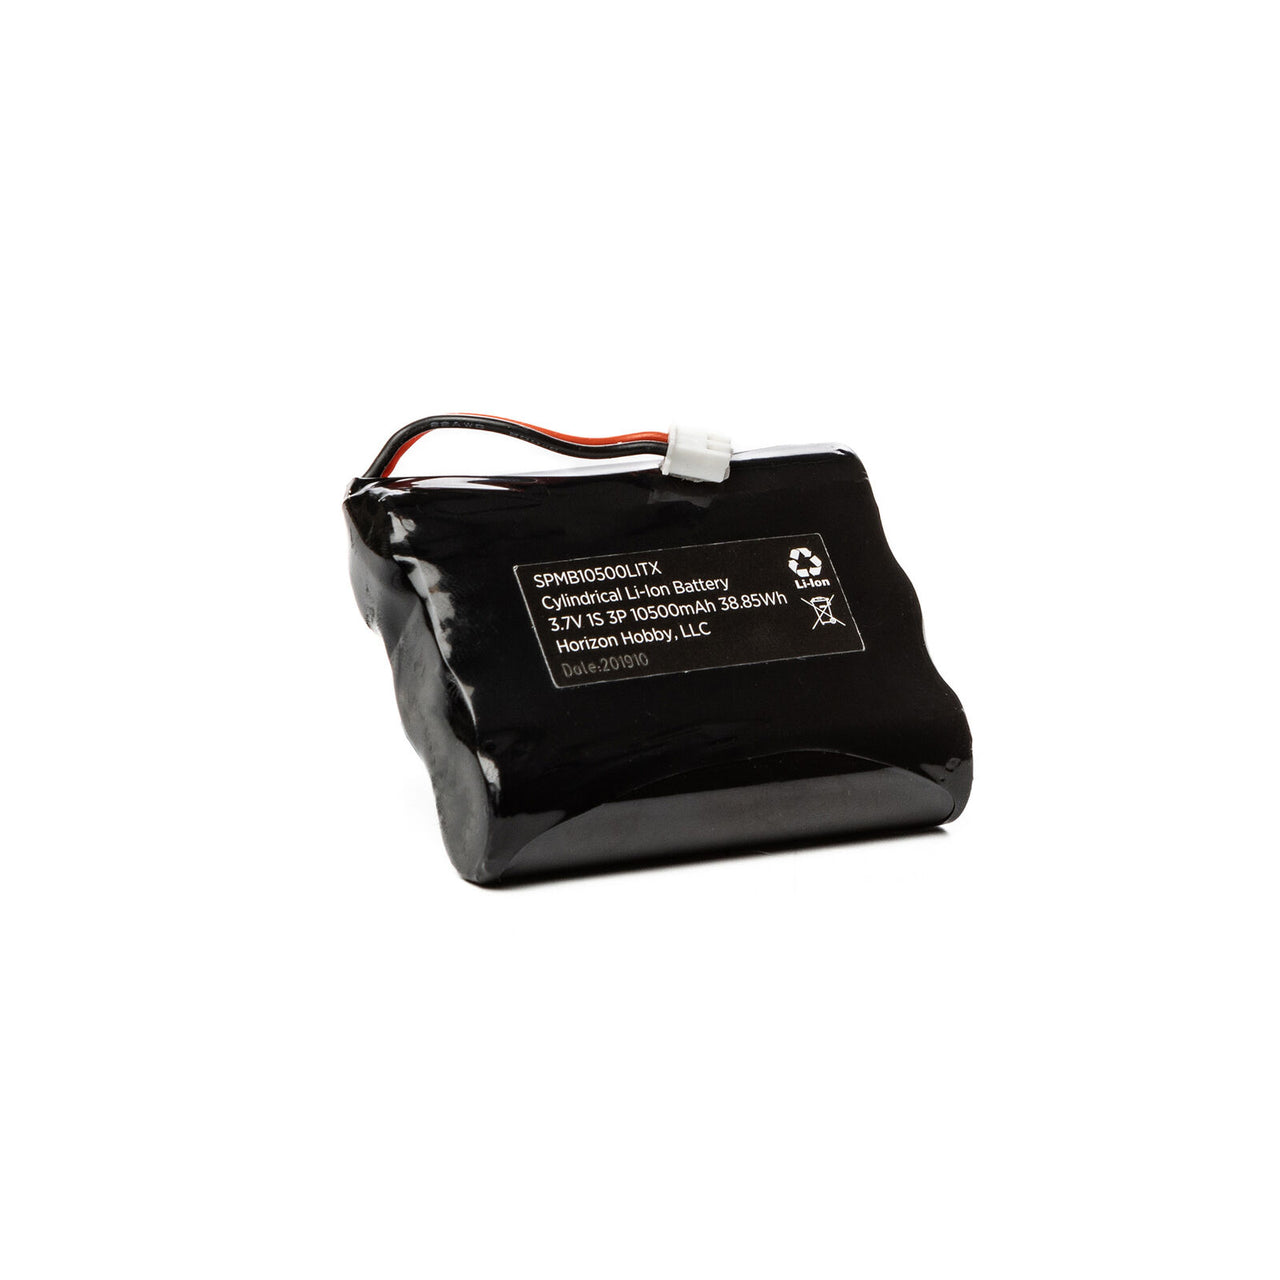 Batterie TX SPMB10500LITX 3,7 V 1S 10 500 mAh : iX20